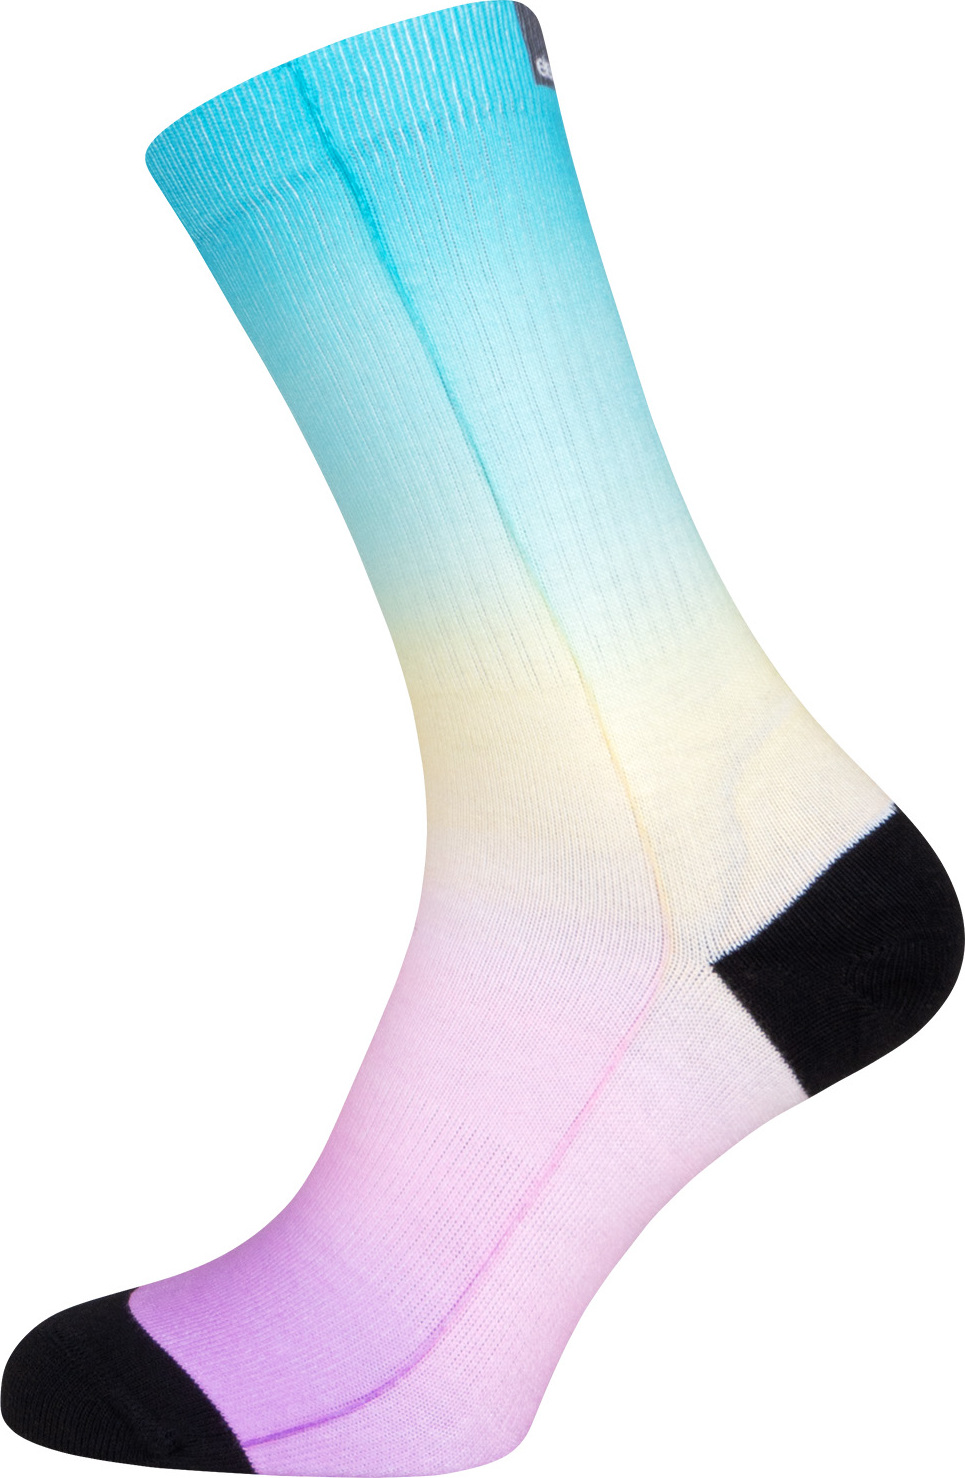 Ponožky ELEVEN Nina Marshmallow Velikost: S-M (36 - 40)